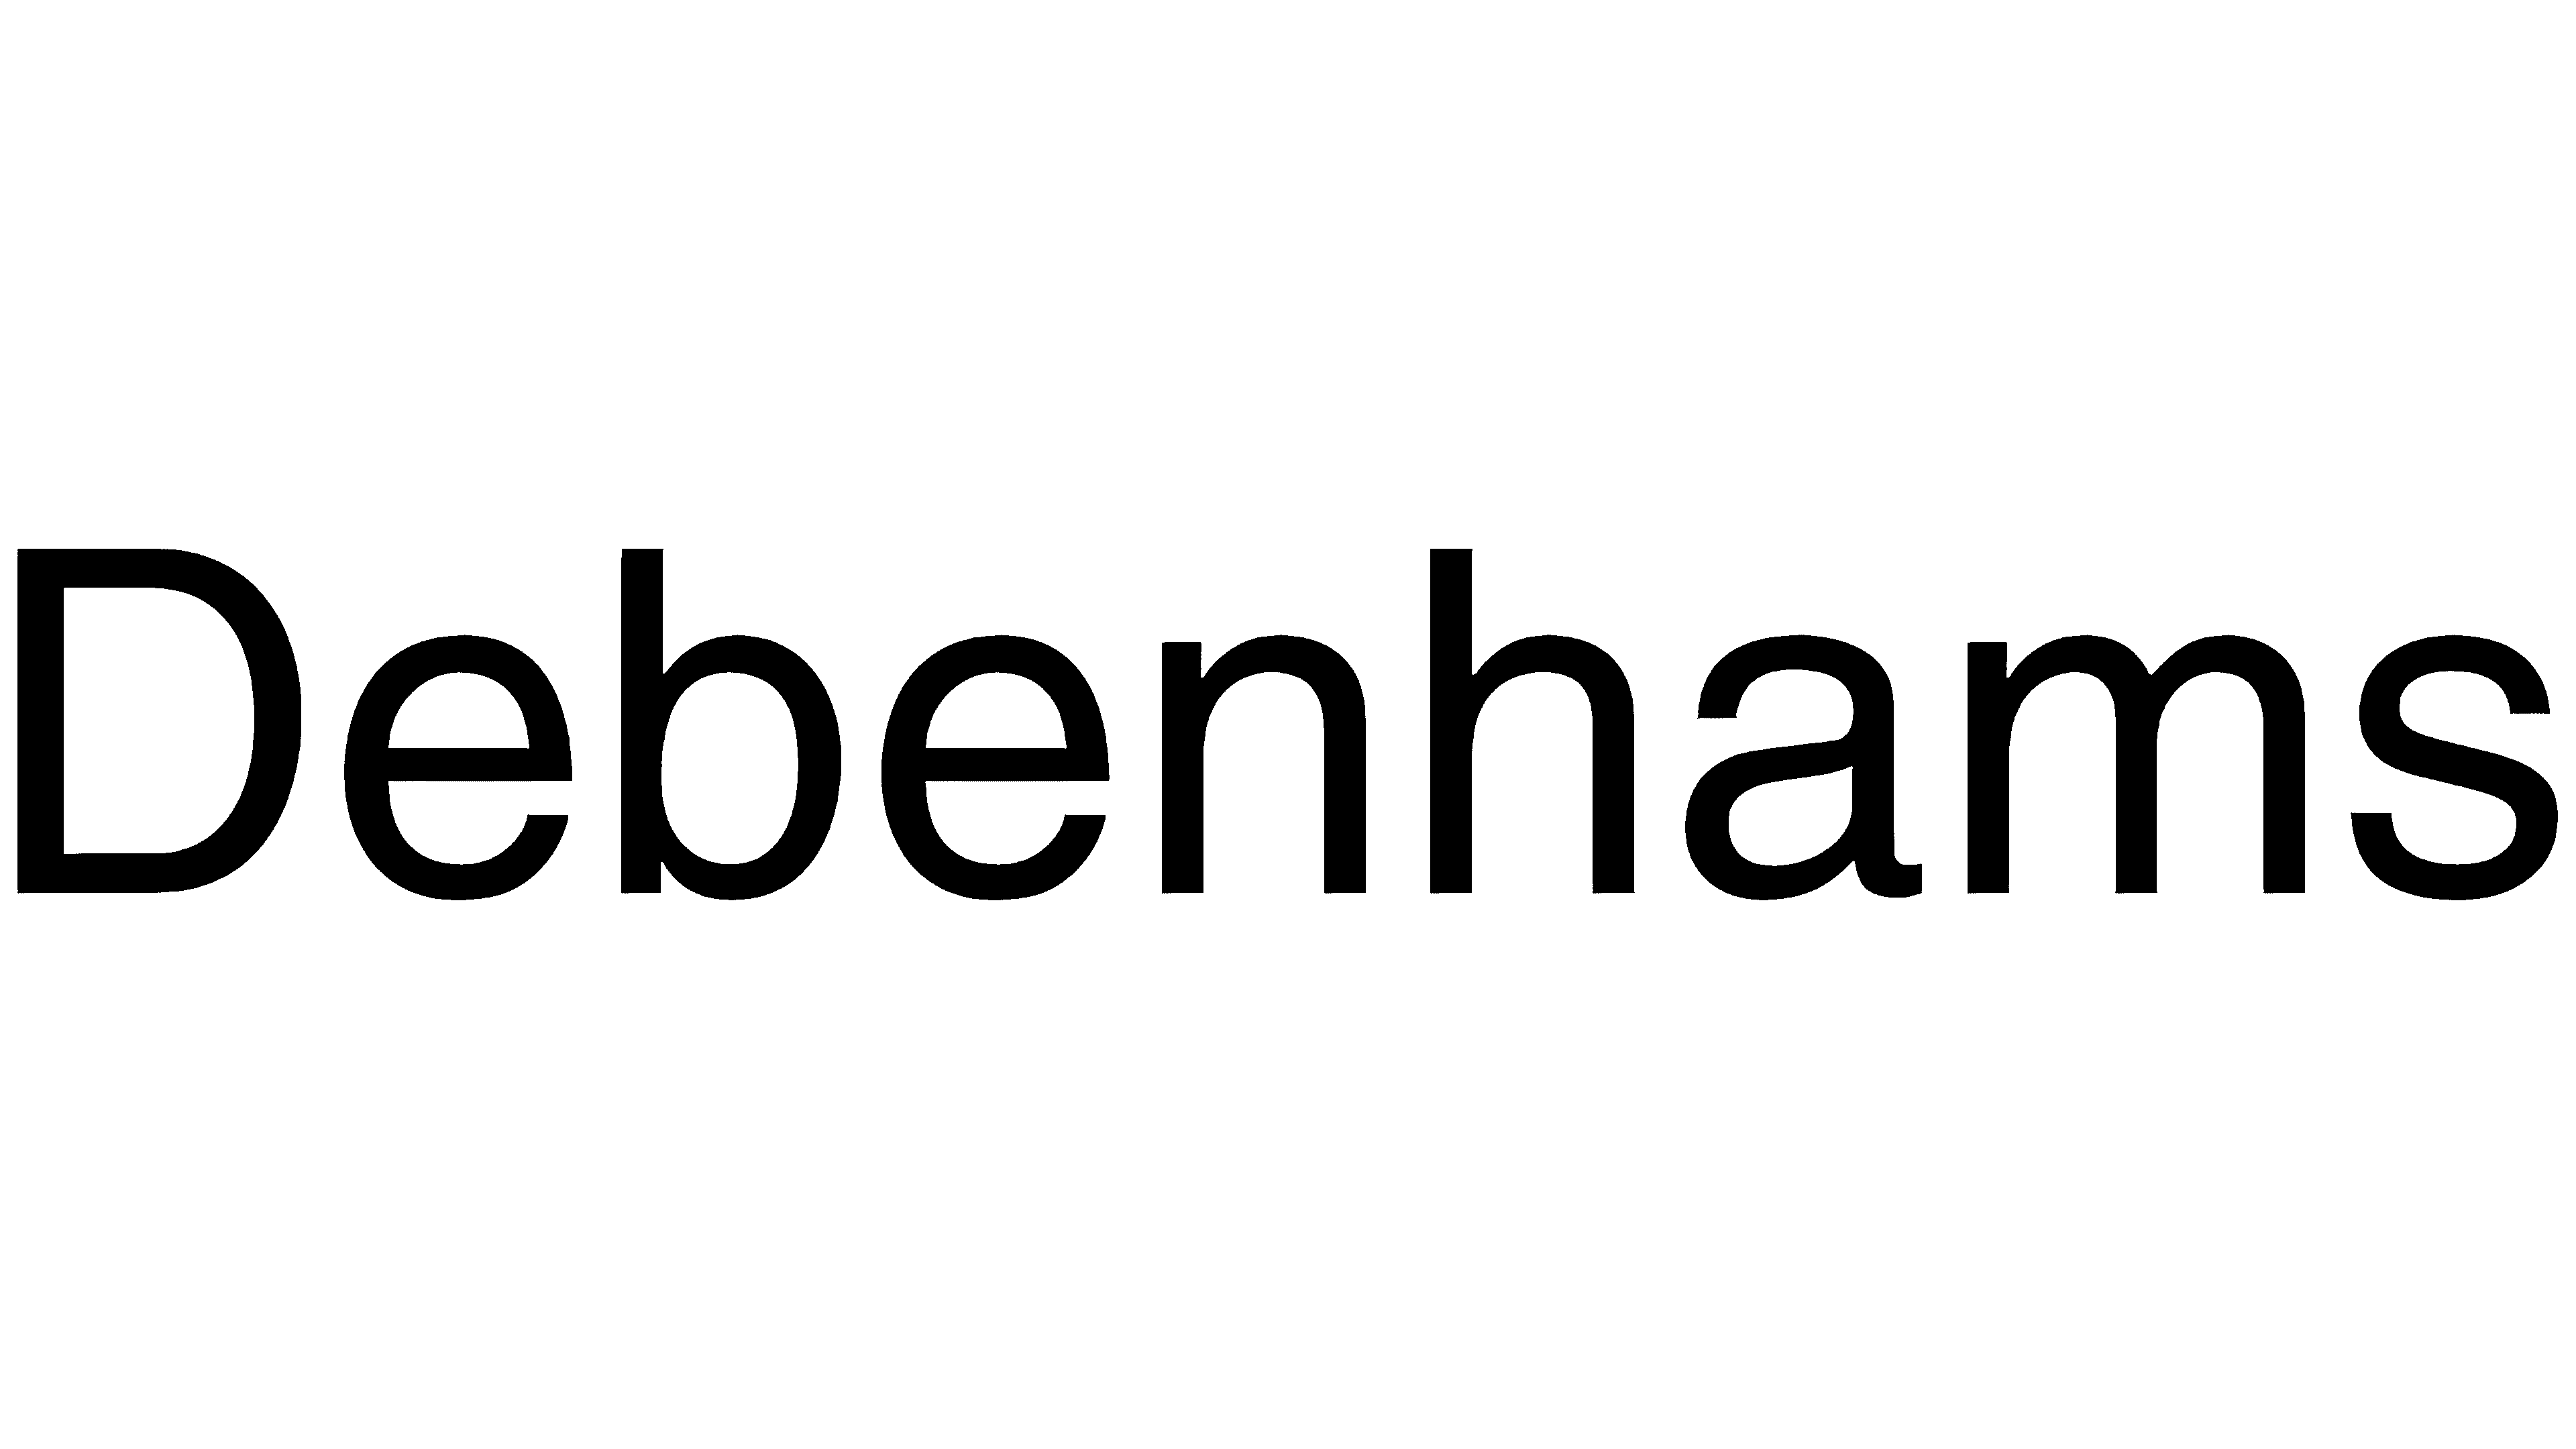 How to pronounce Debenhams